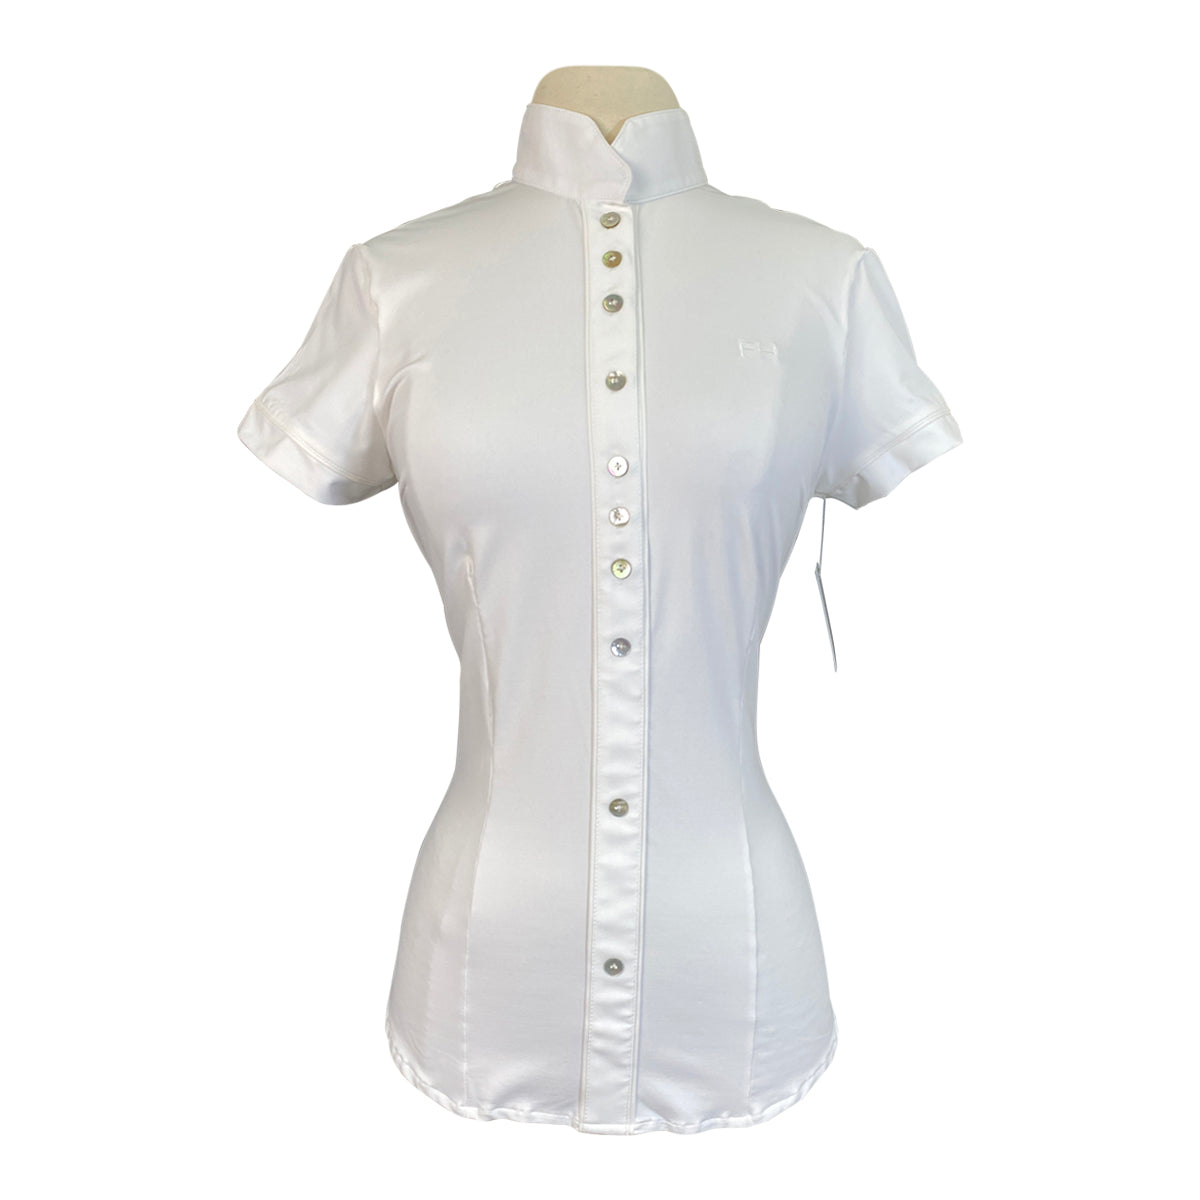 For Horses &#39;Alzira&#39; Show Shirt in White